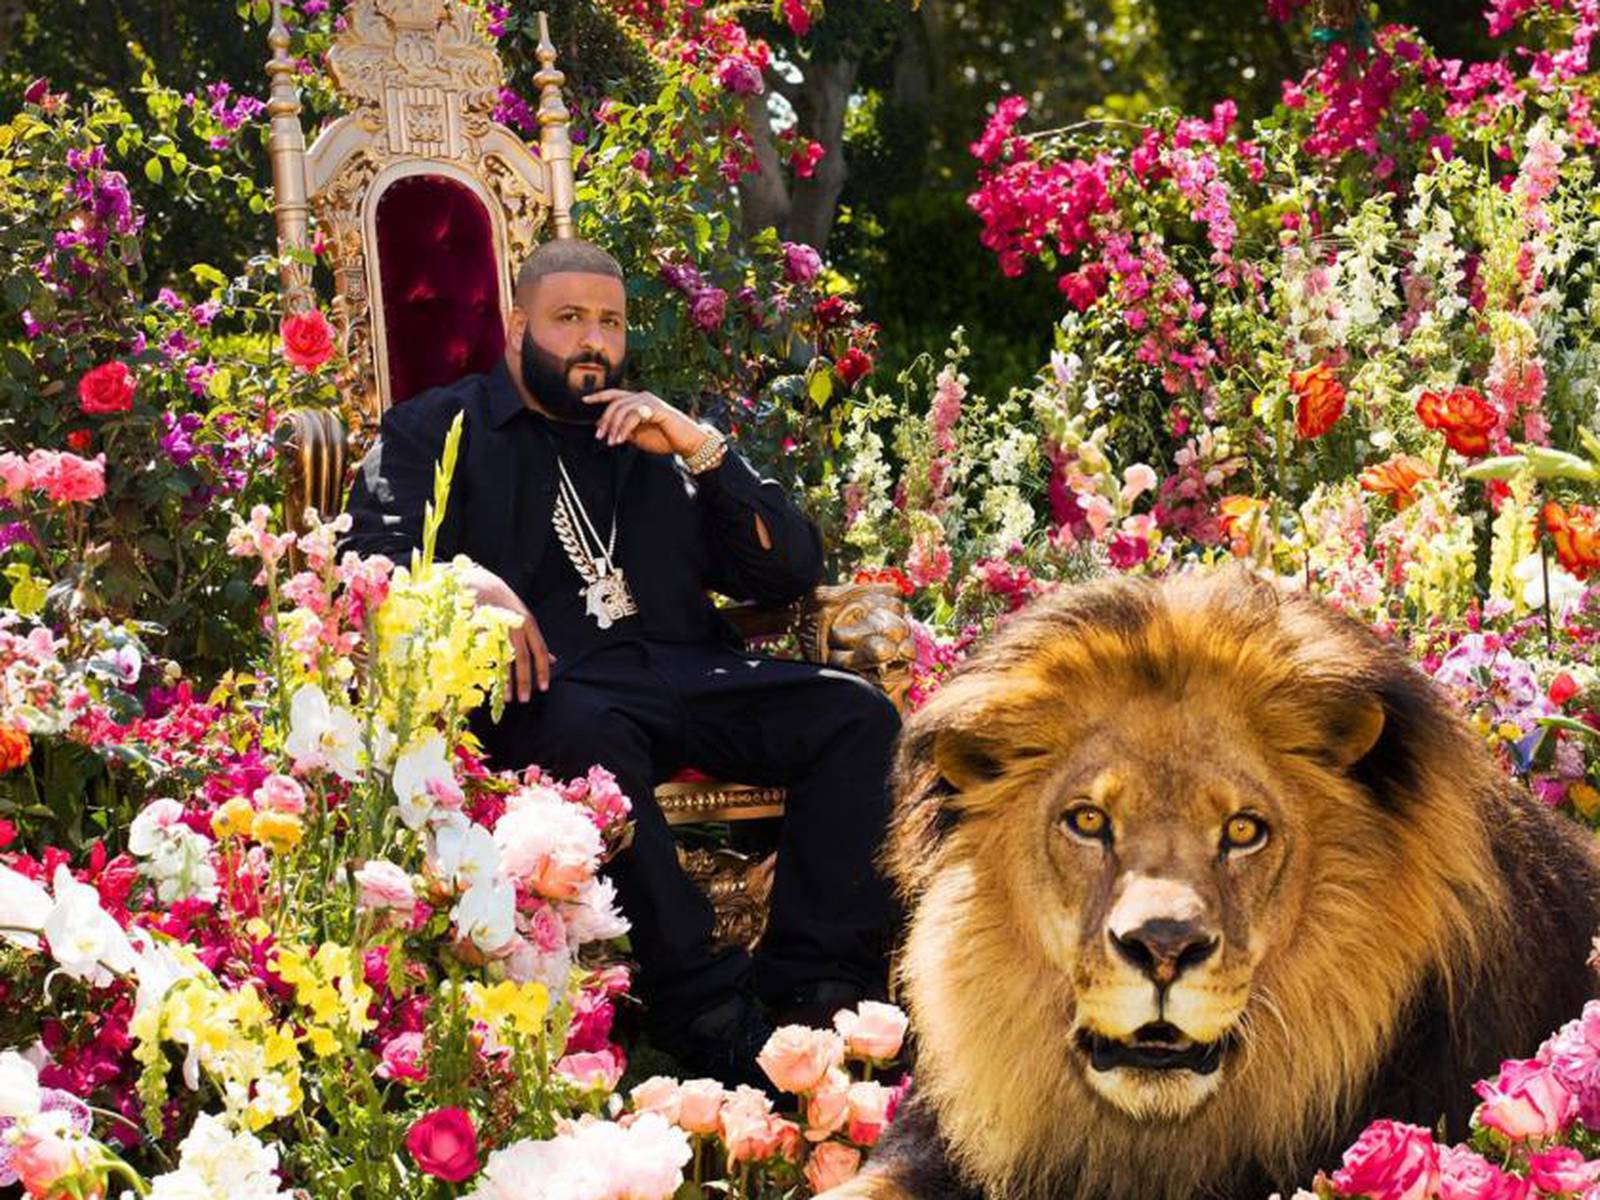 DJ Khaled: Major Key Album Review